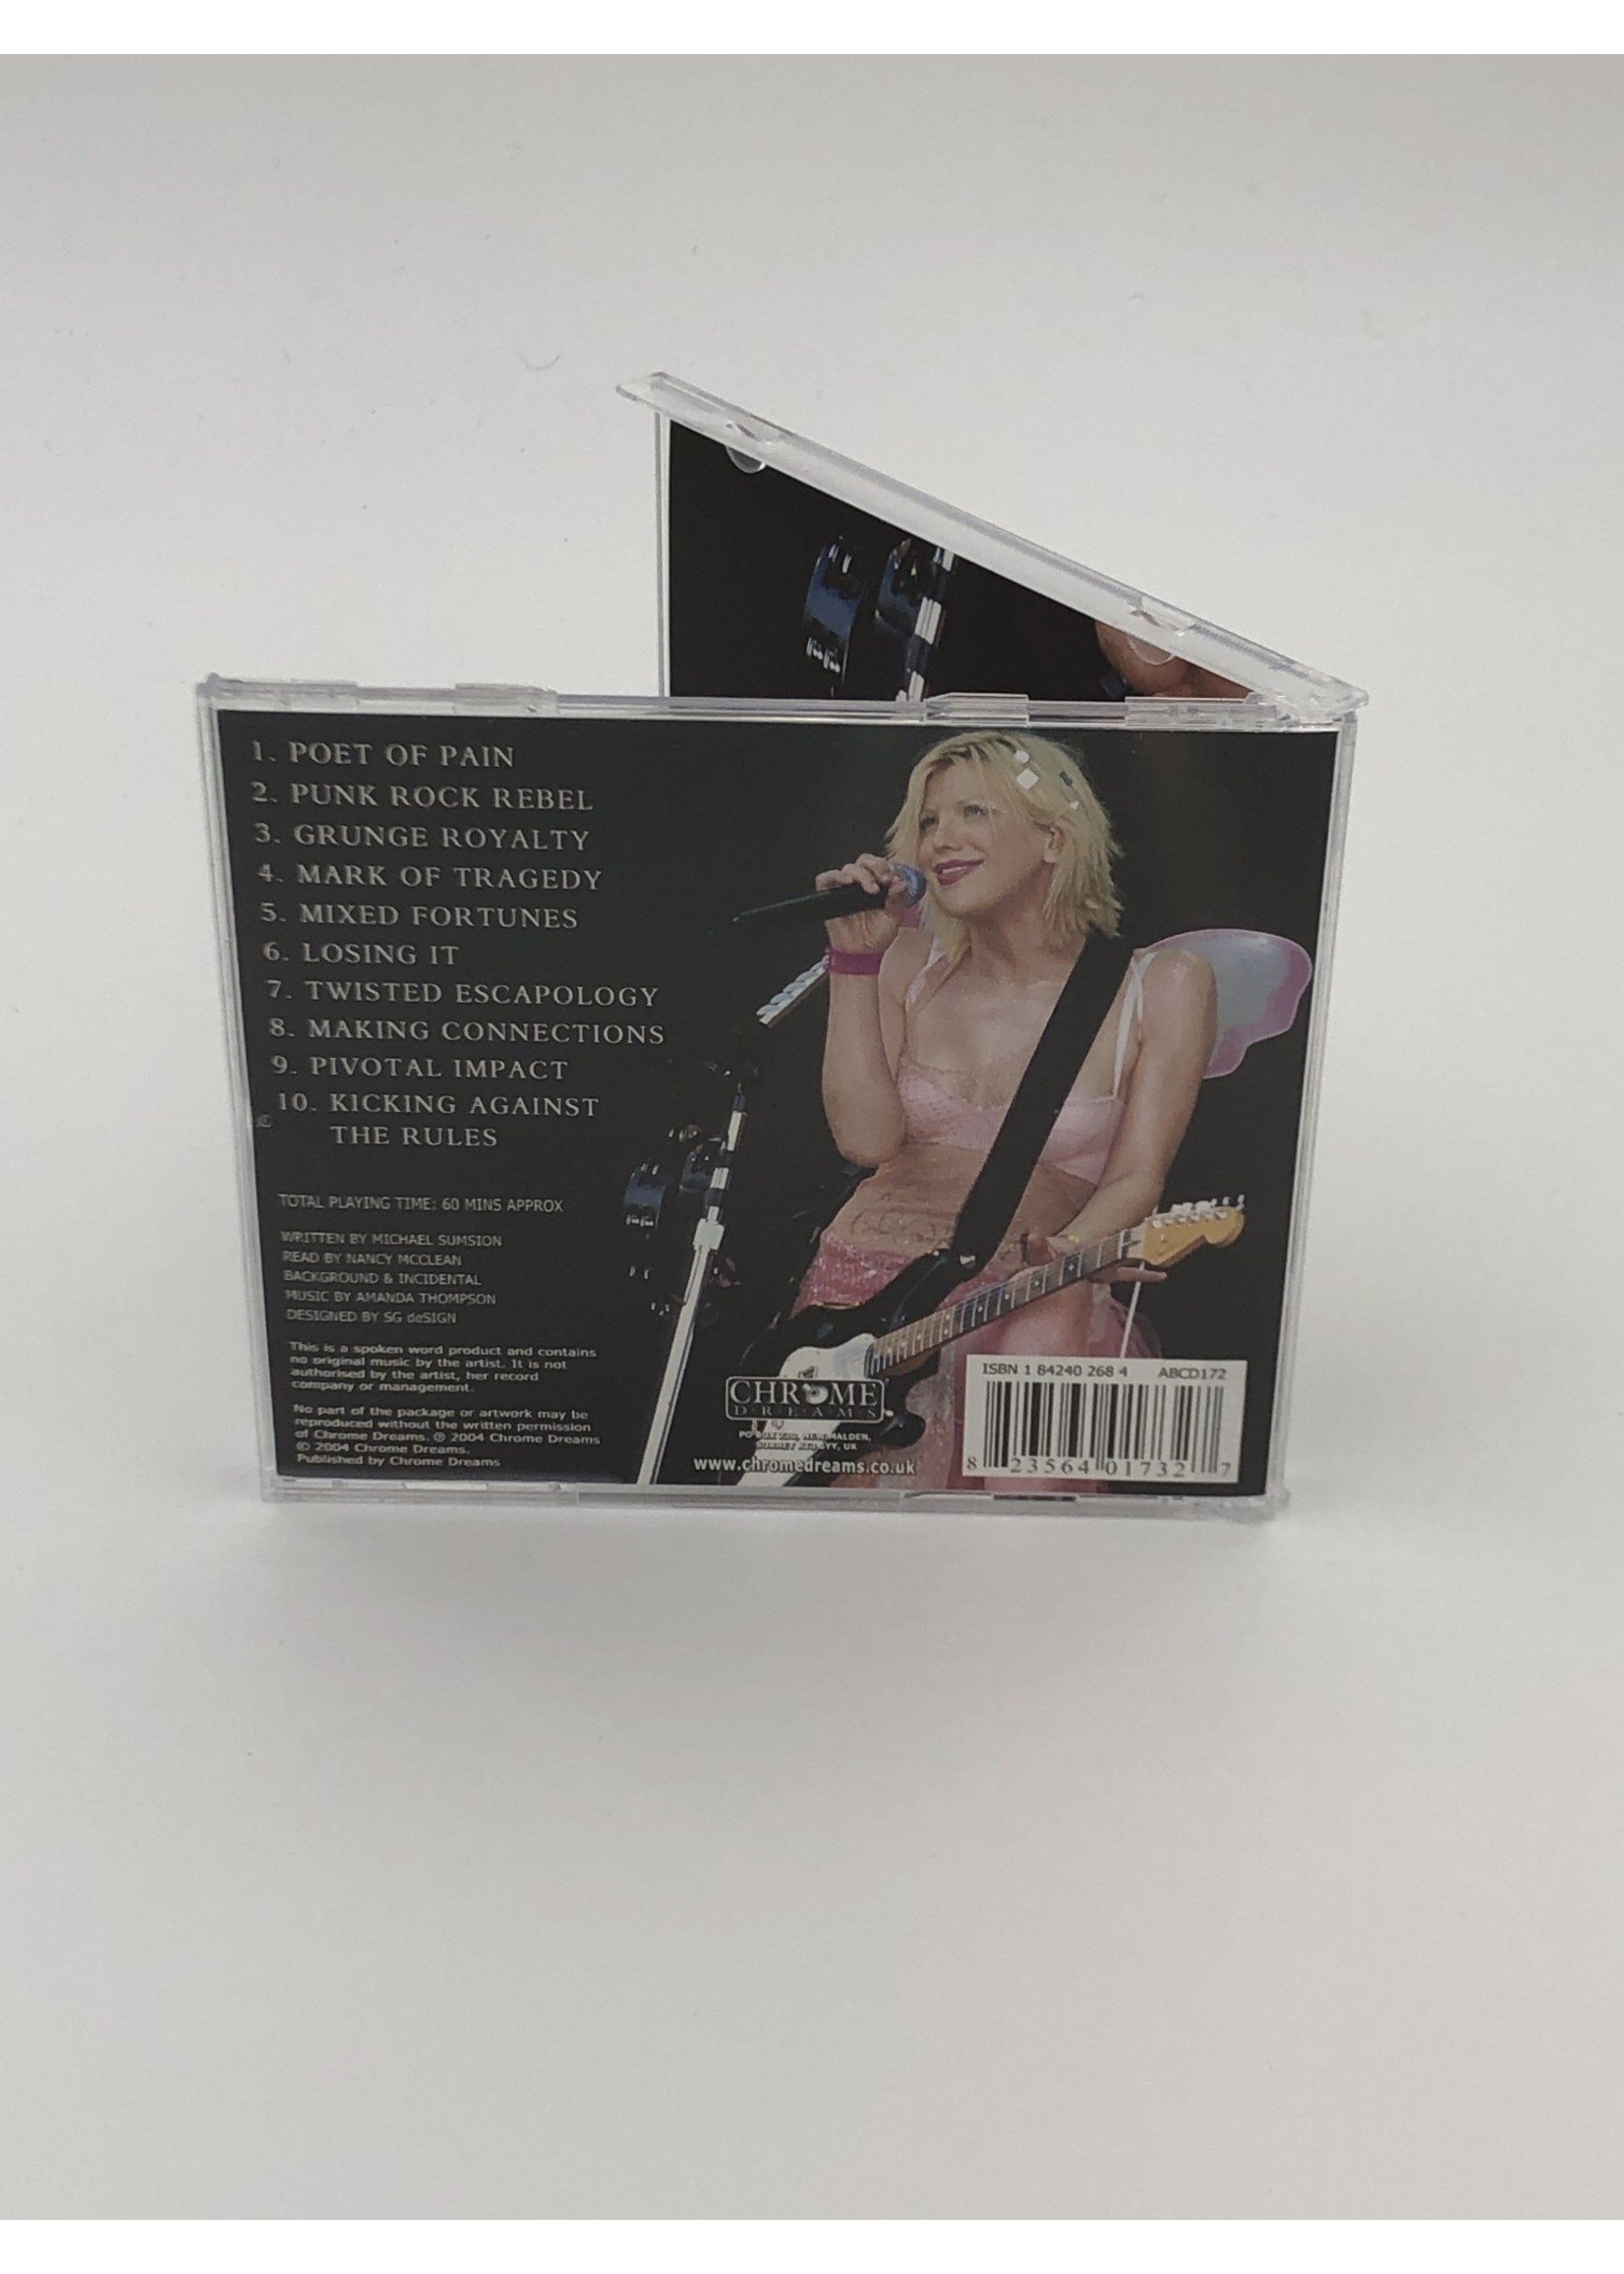 CD Maximum Courtney Love: CD Auto Biography